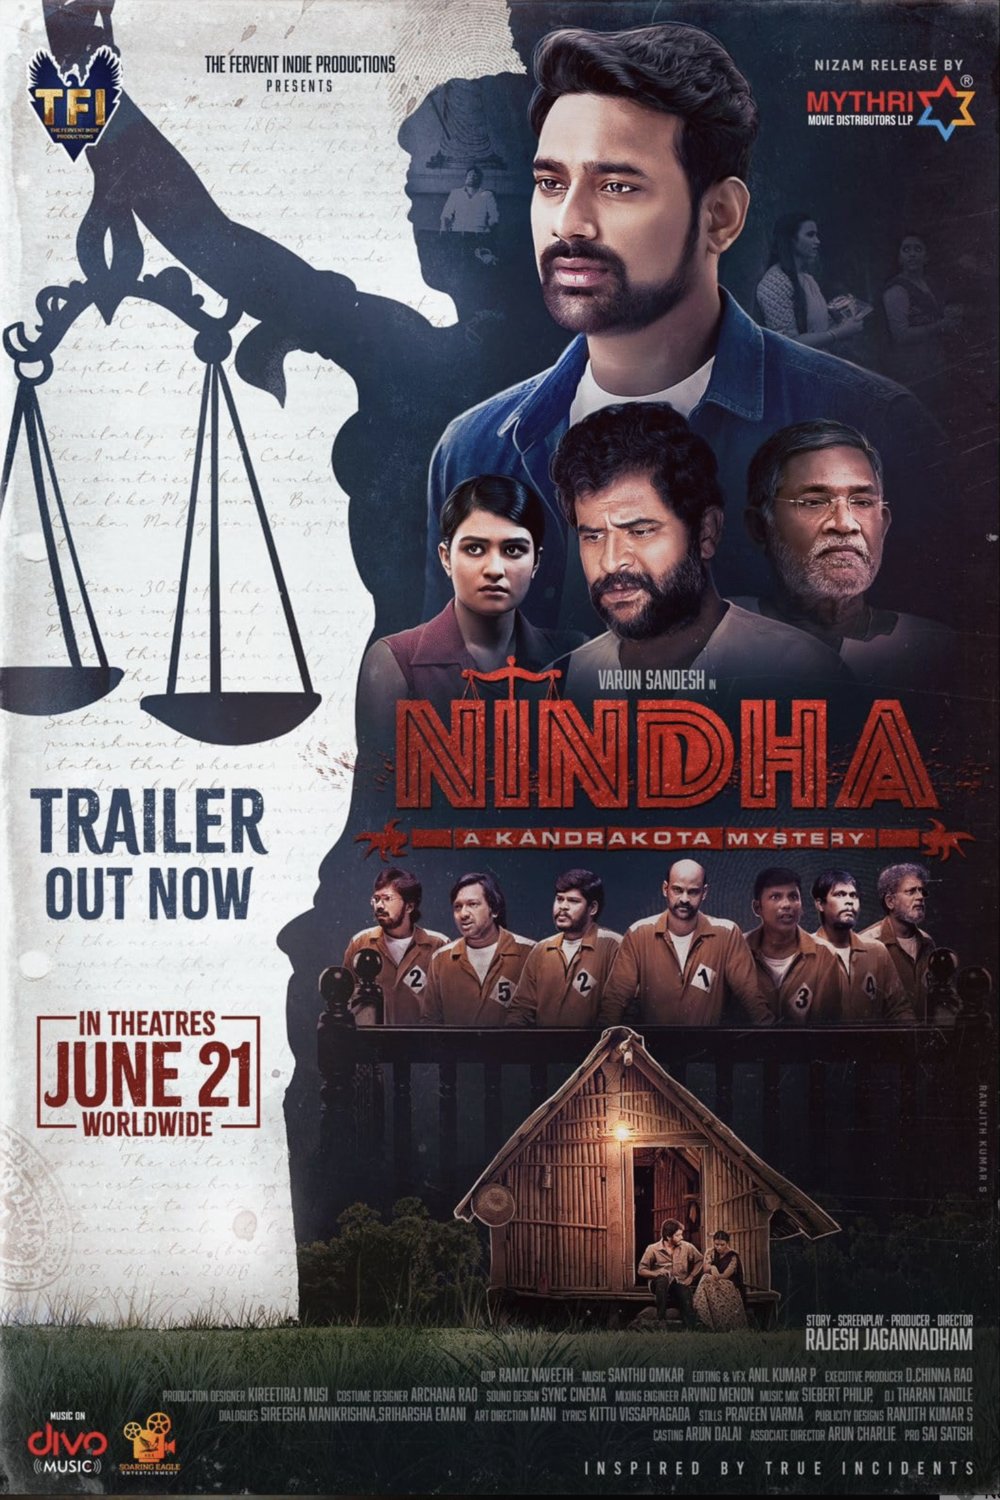 Telugu poster of the movie Nindha